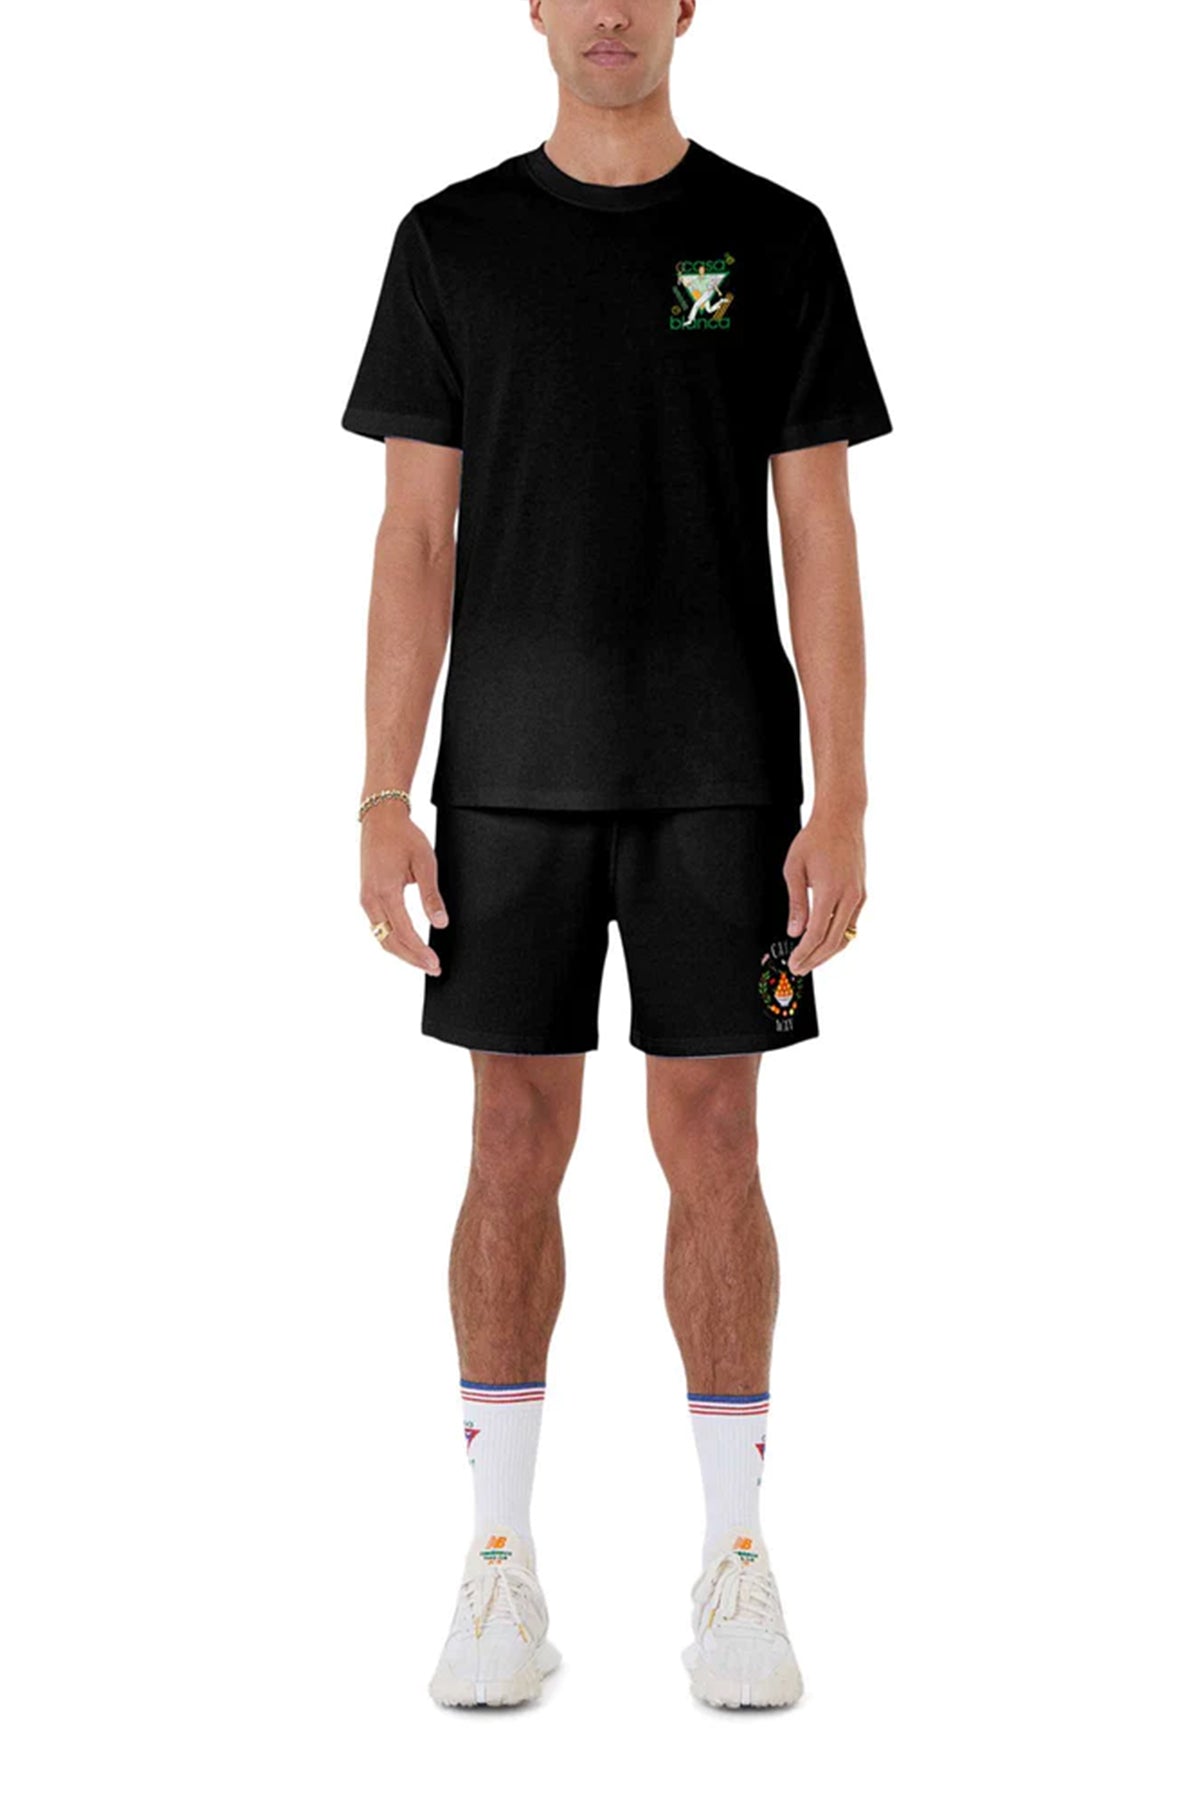 Le Jeu Printed Unisex T-Shirt in Black - shop-olivia.com